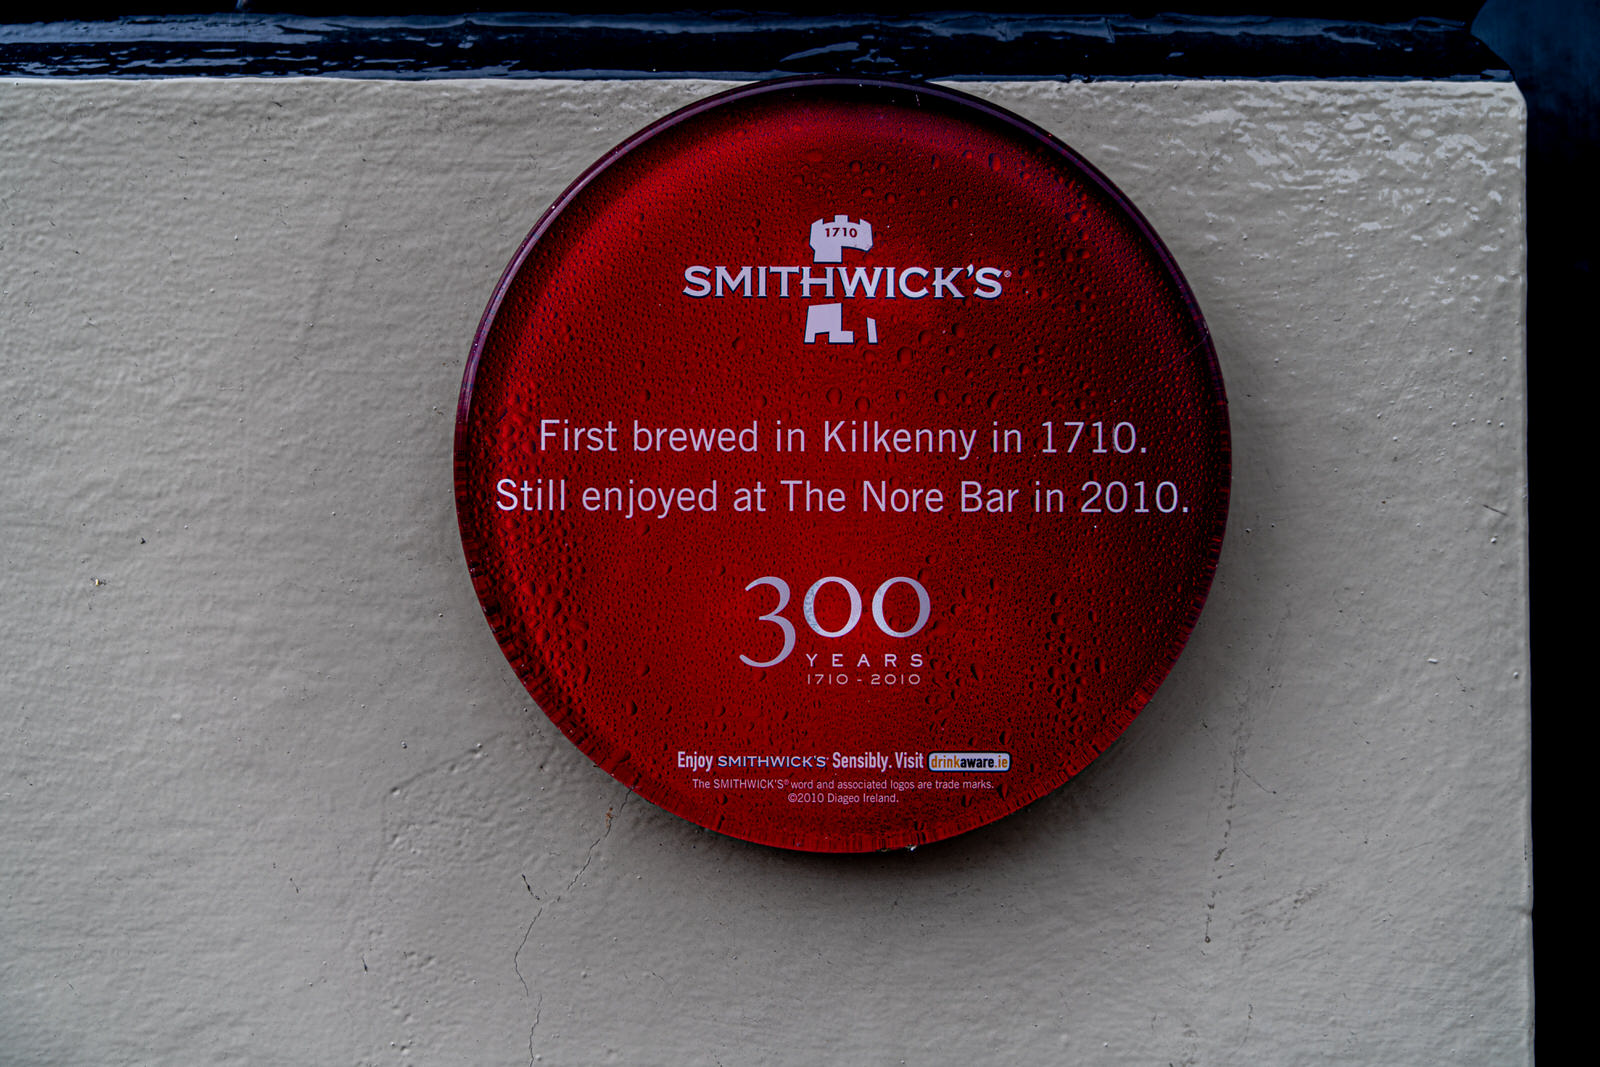  Smithwicks brewery was founded in Kilkenny in 1710 by John Smithwick and run by the Smithwick family of Kilkenny until 1965 